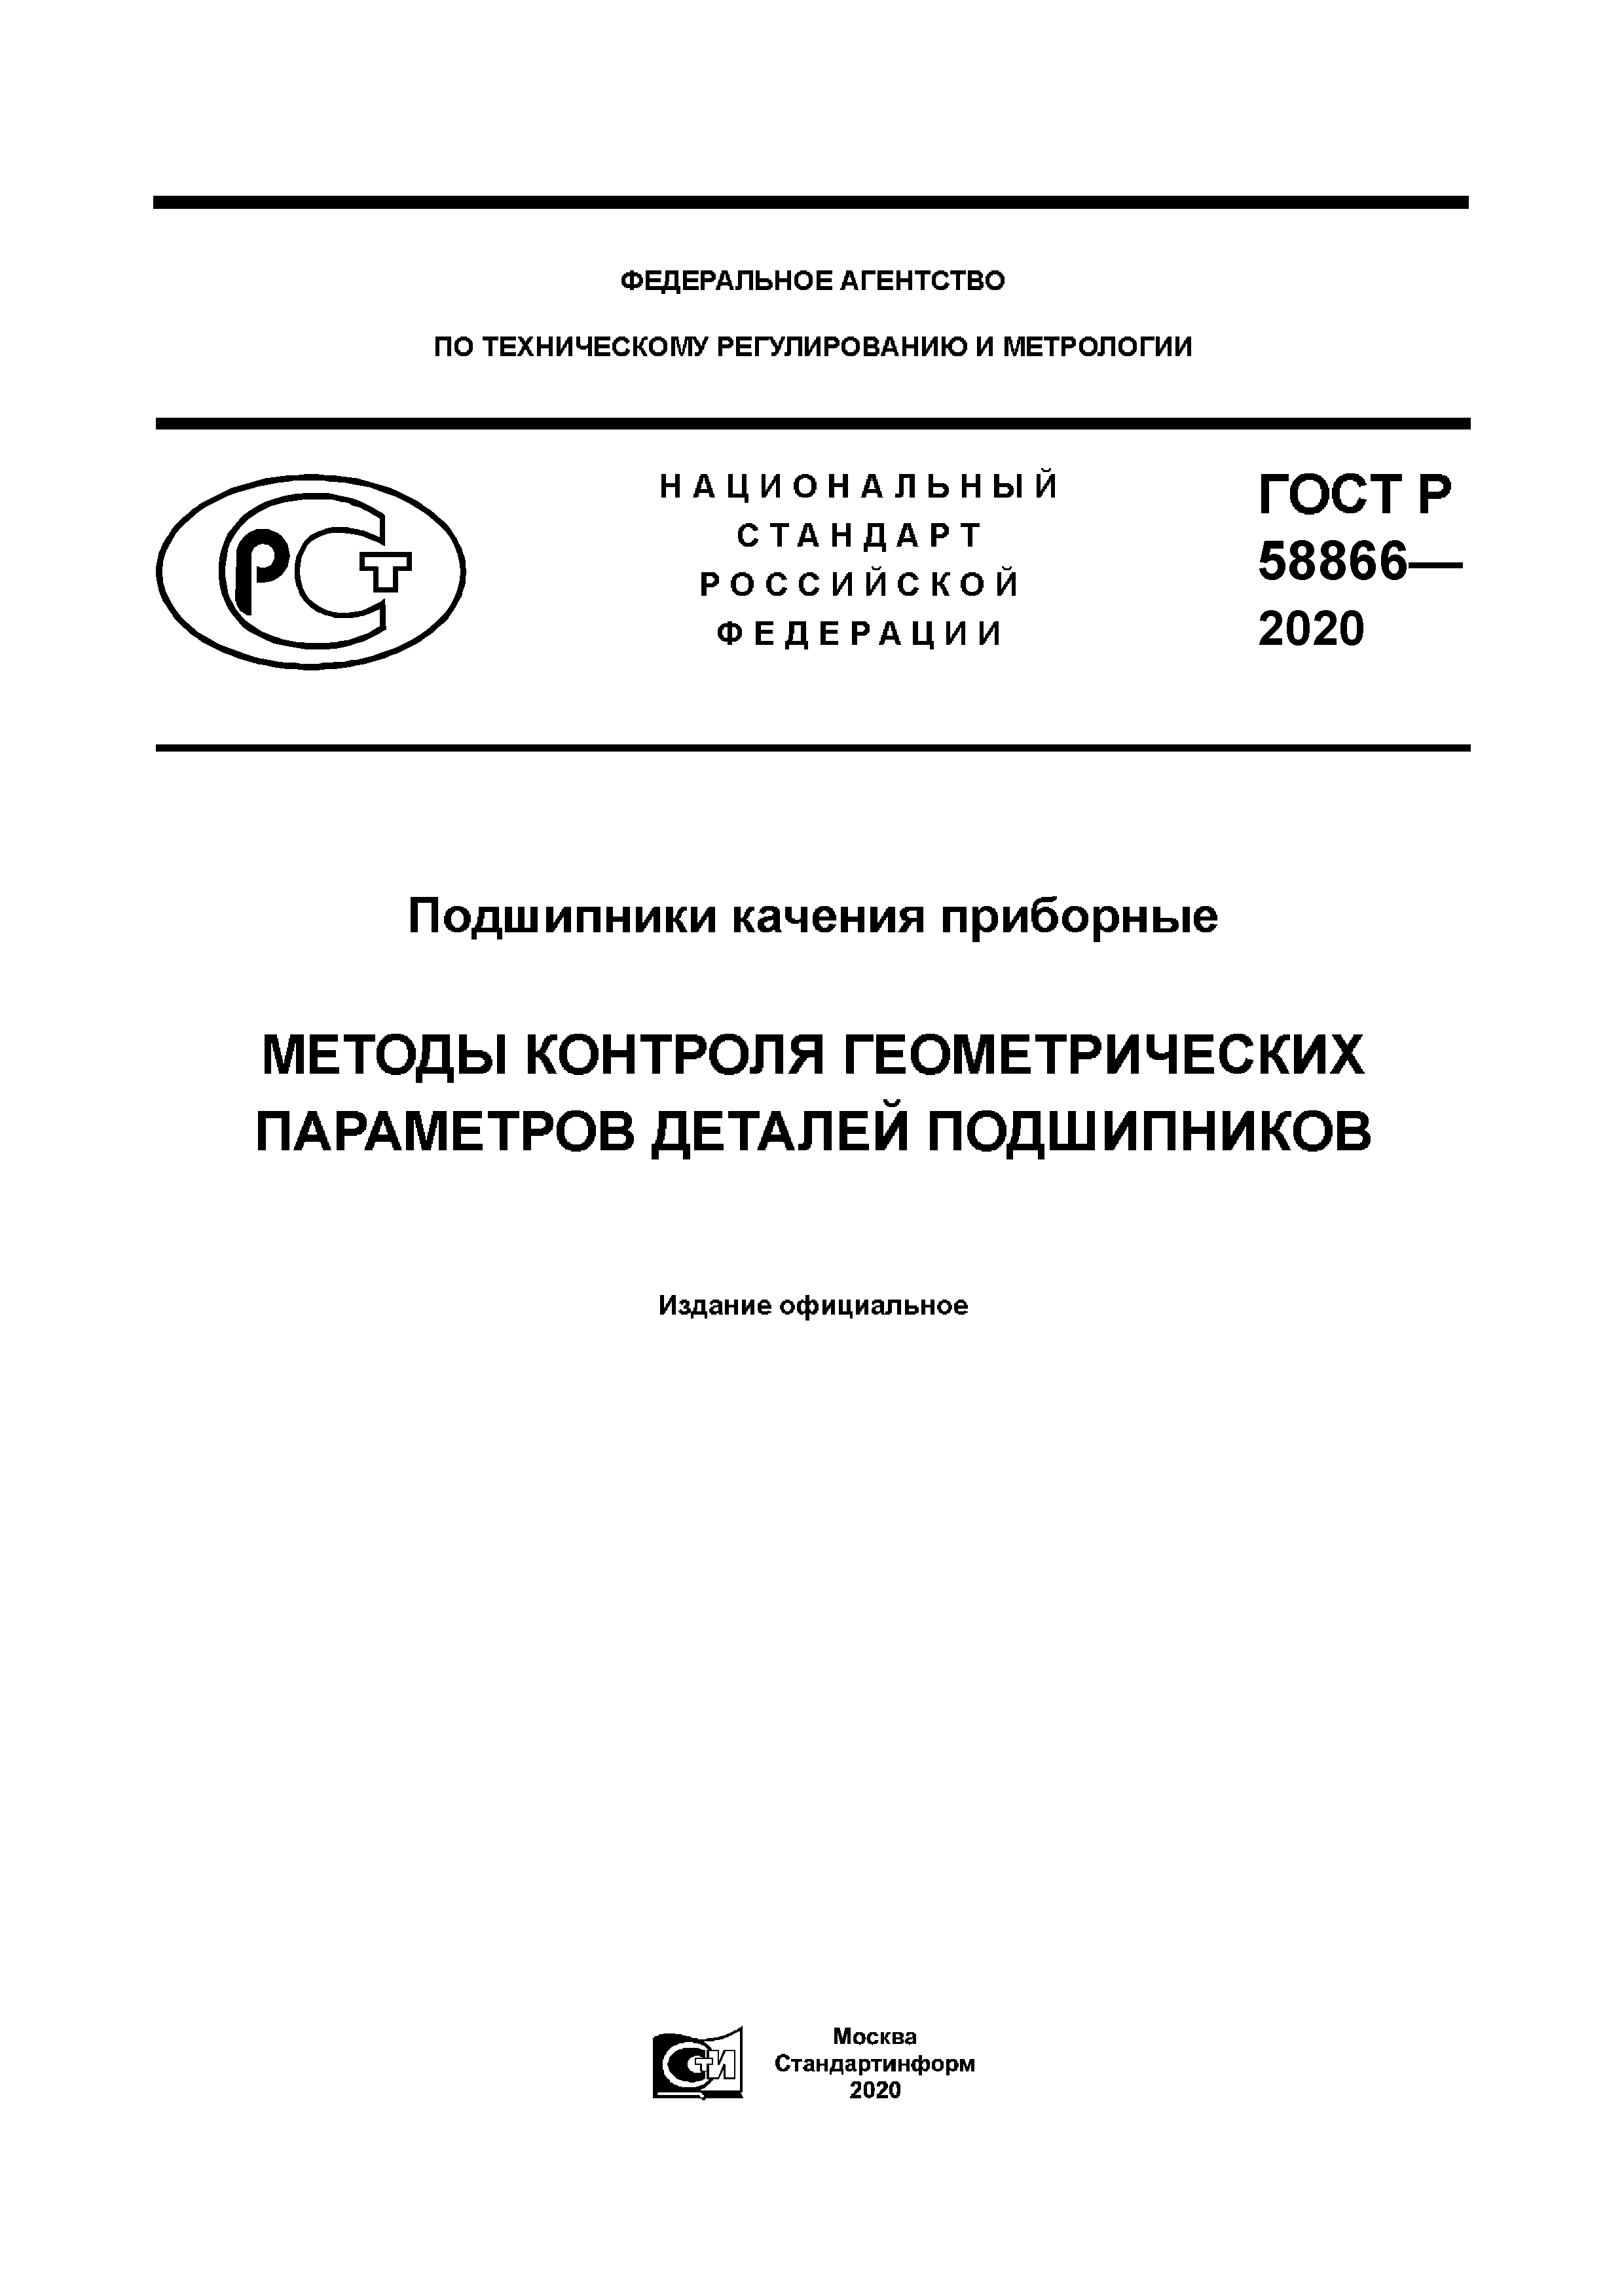 ГОСТ Р 58866-2020